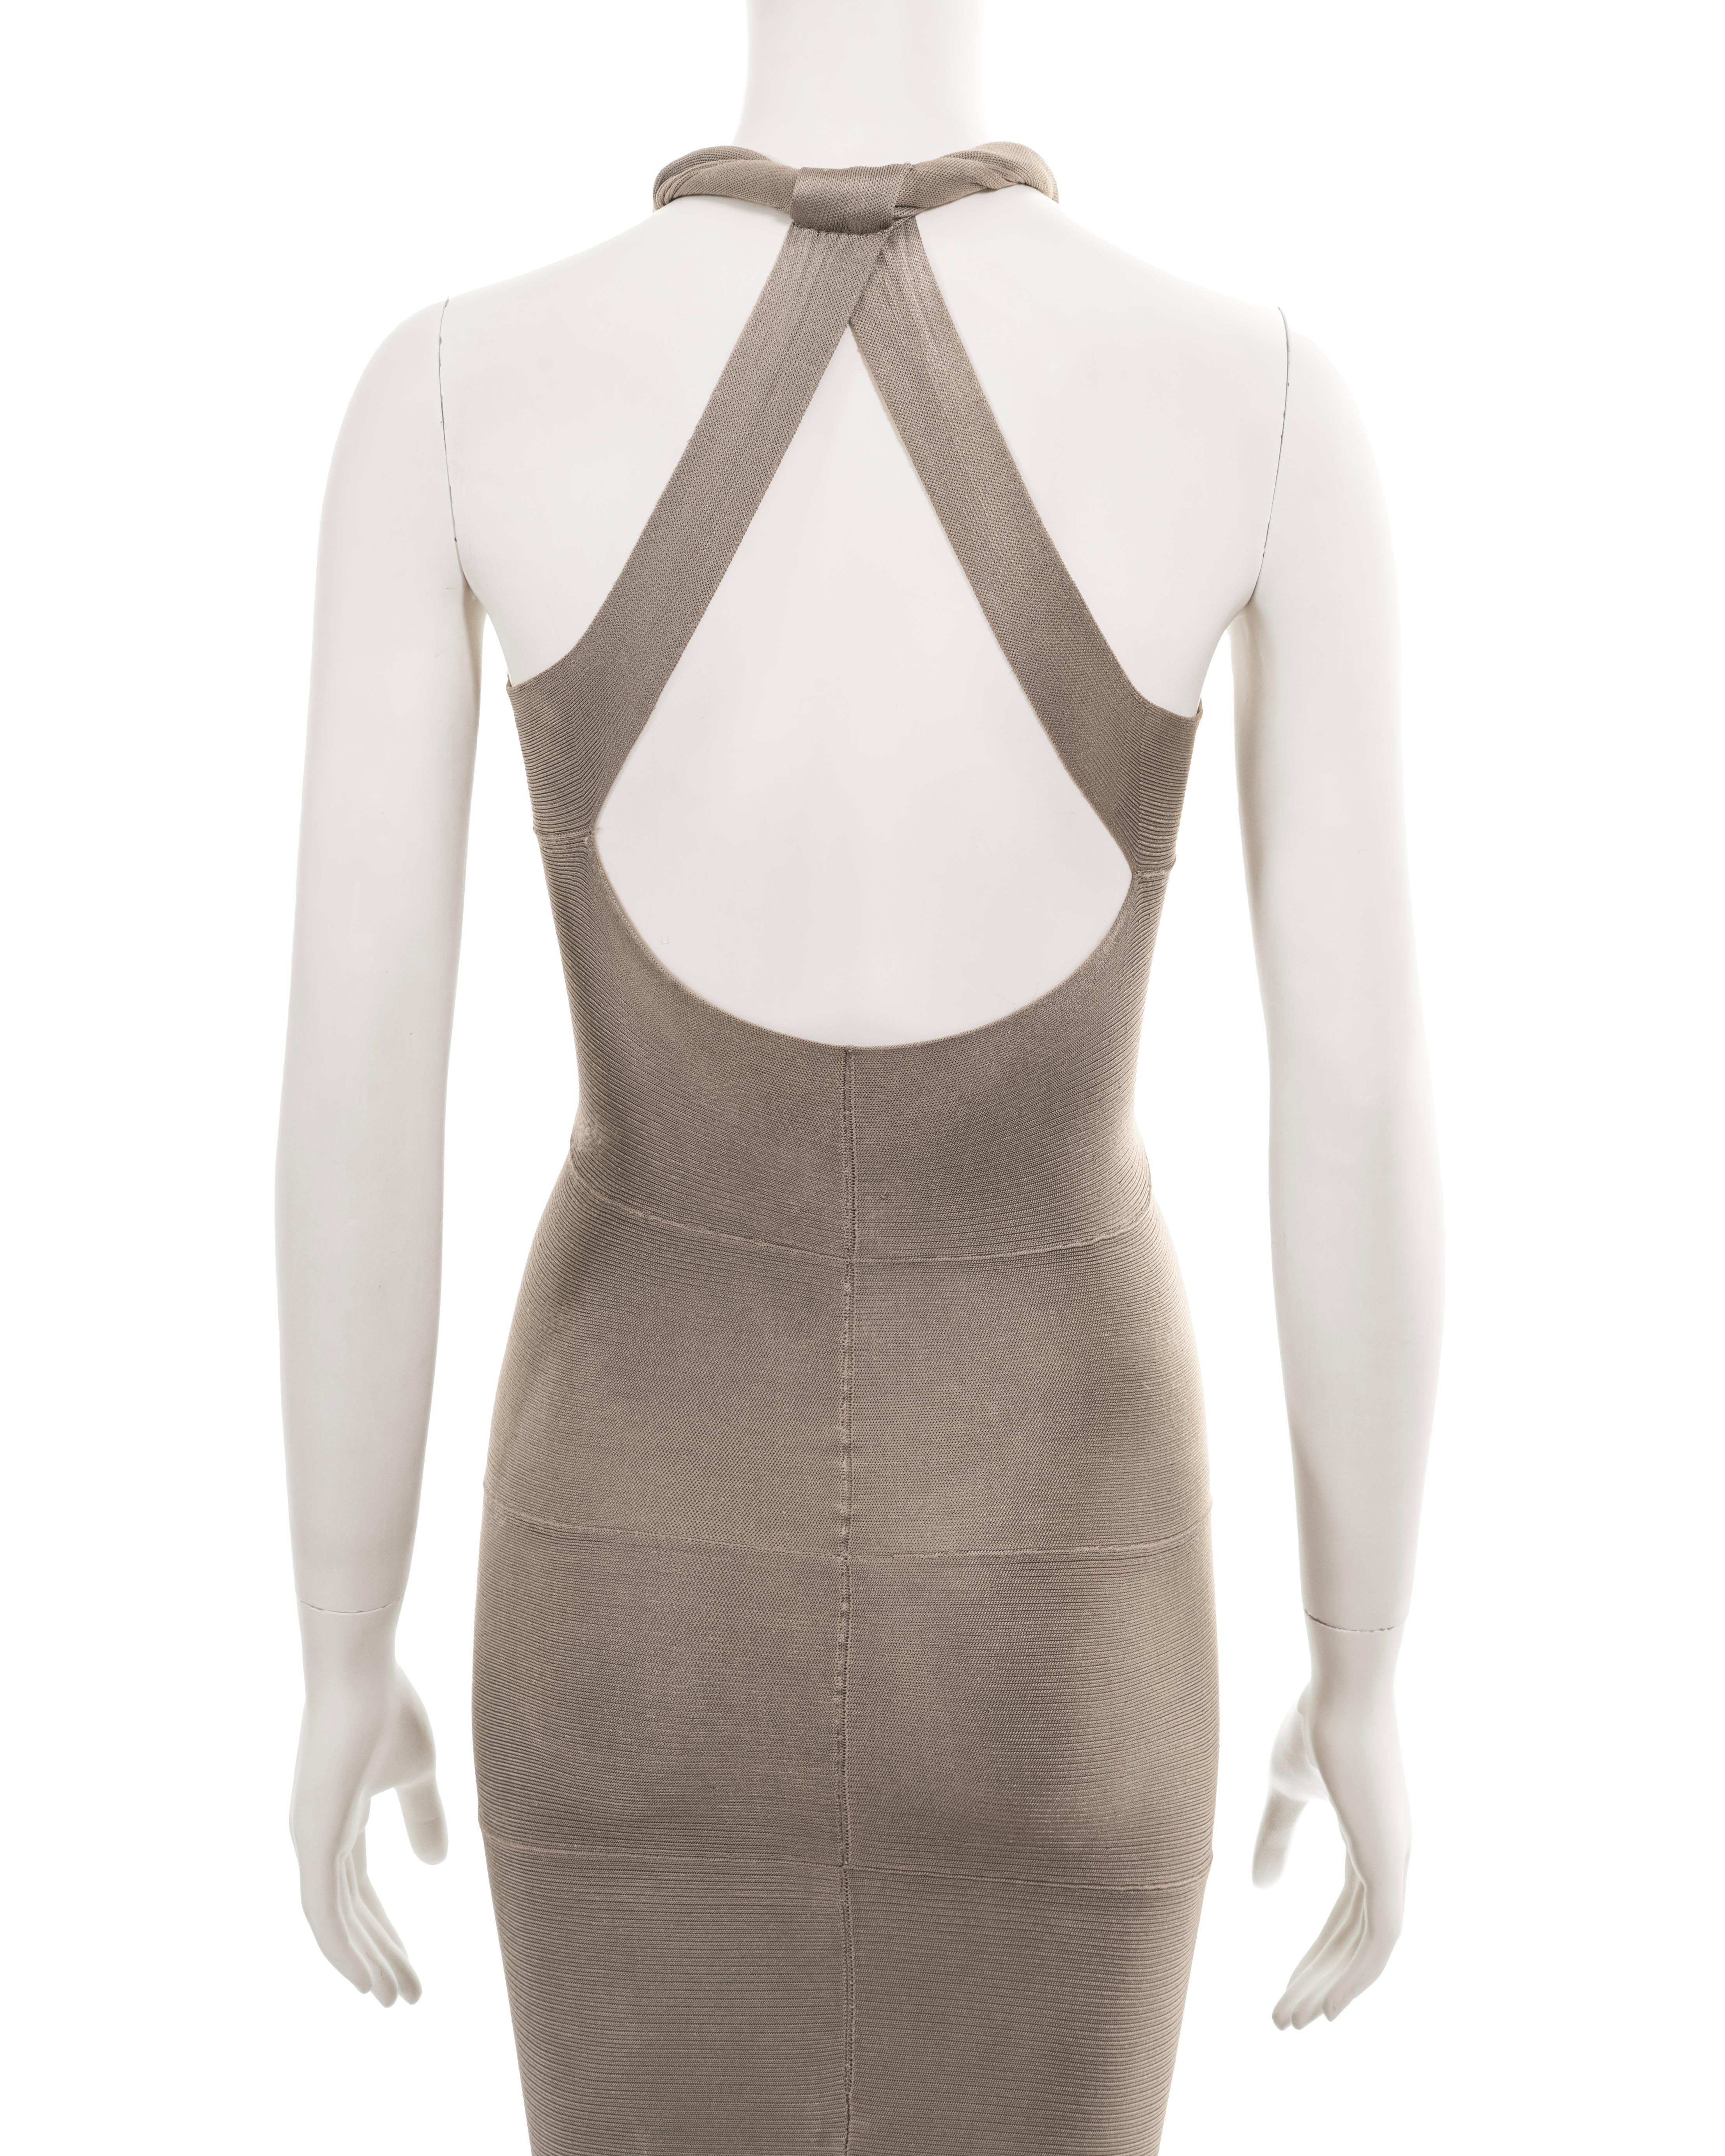 Giorgio Armani stone-grey bandage evening dress, ss 2006 5